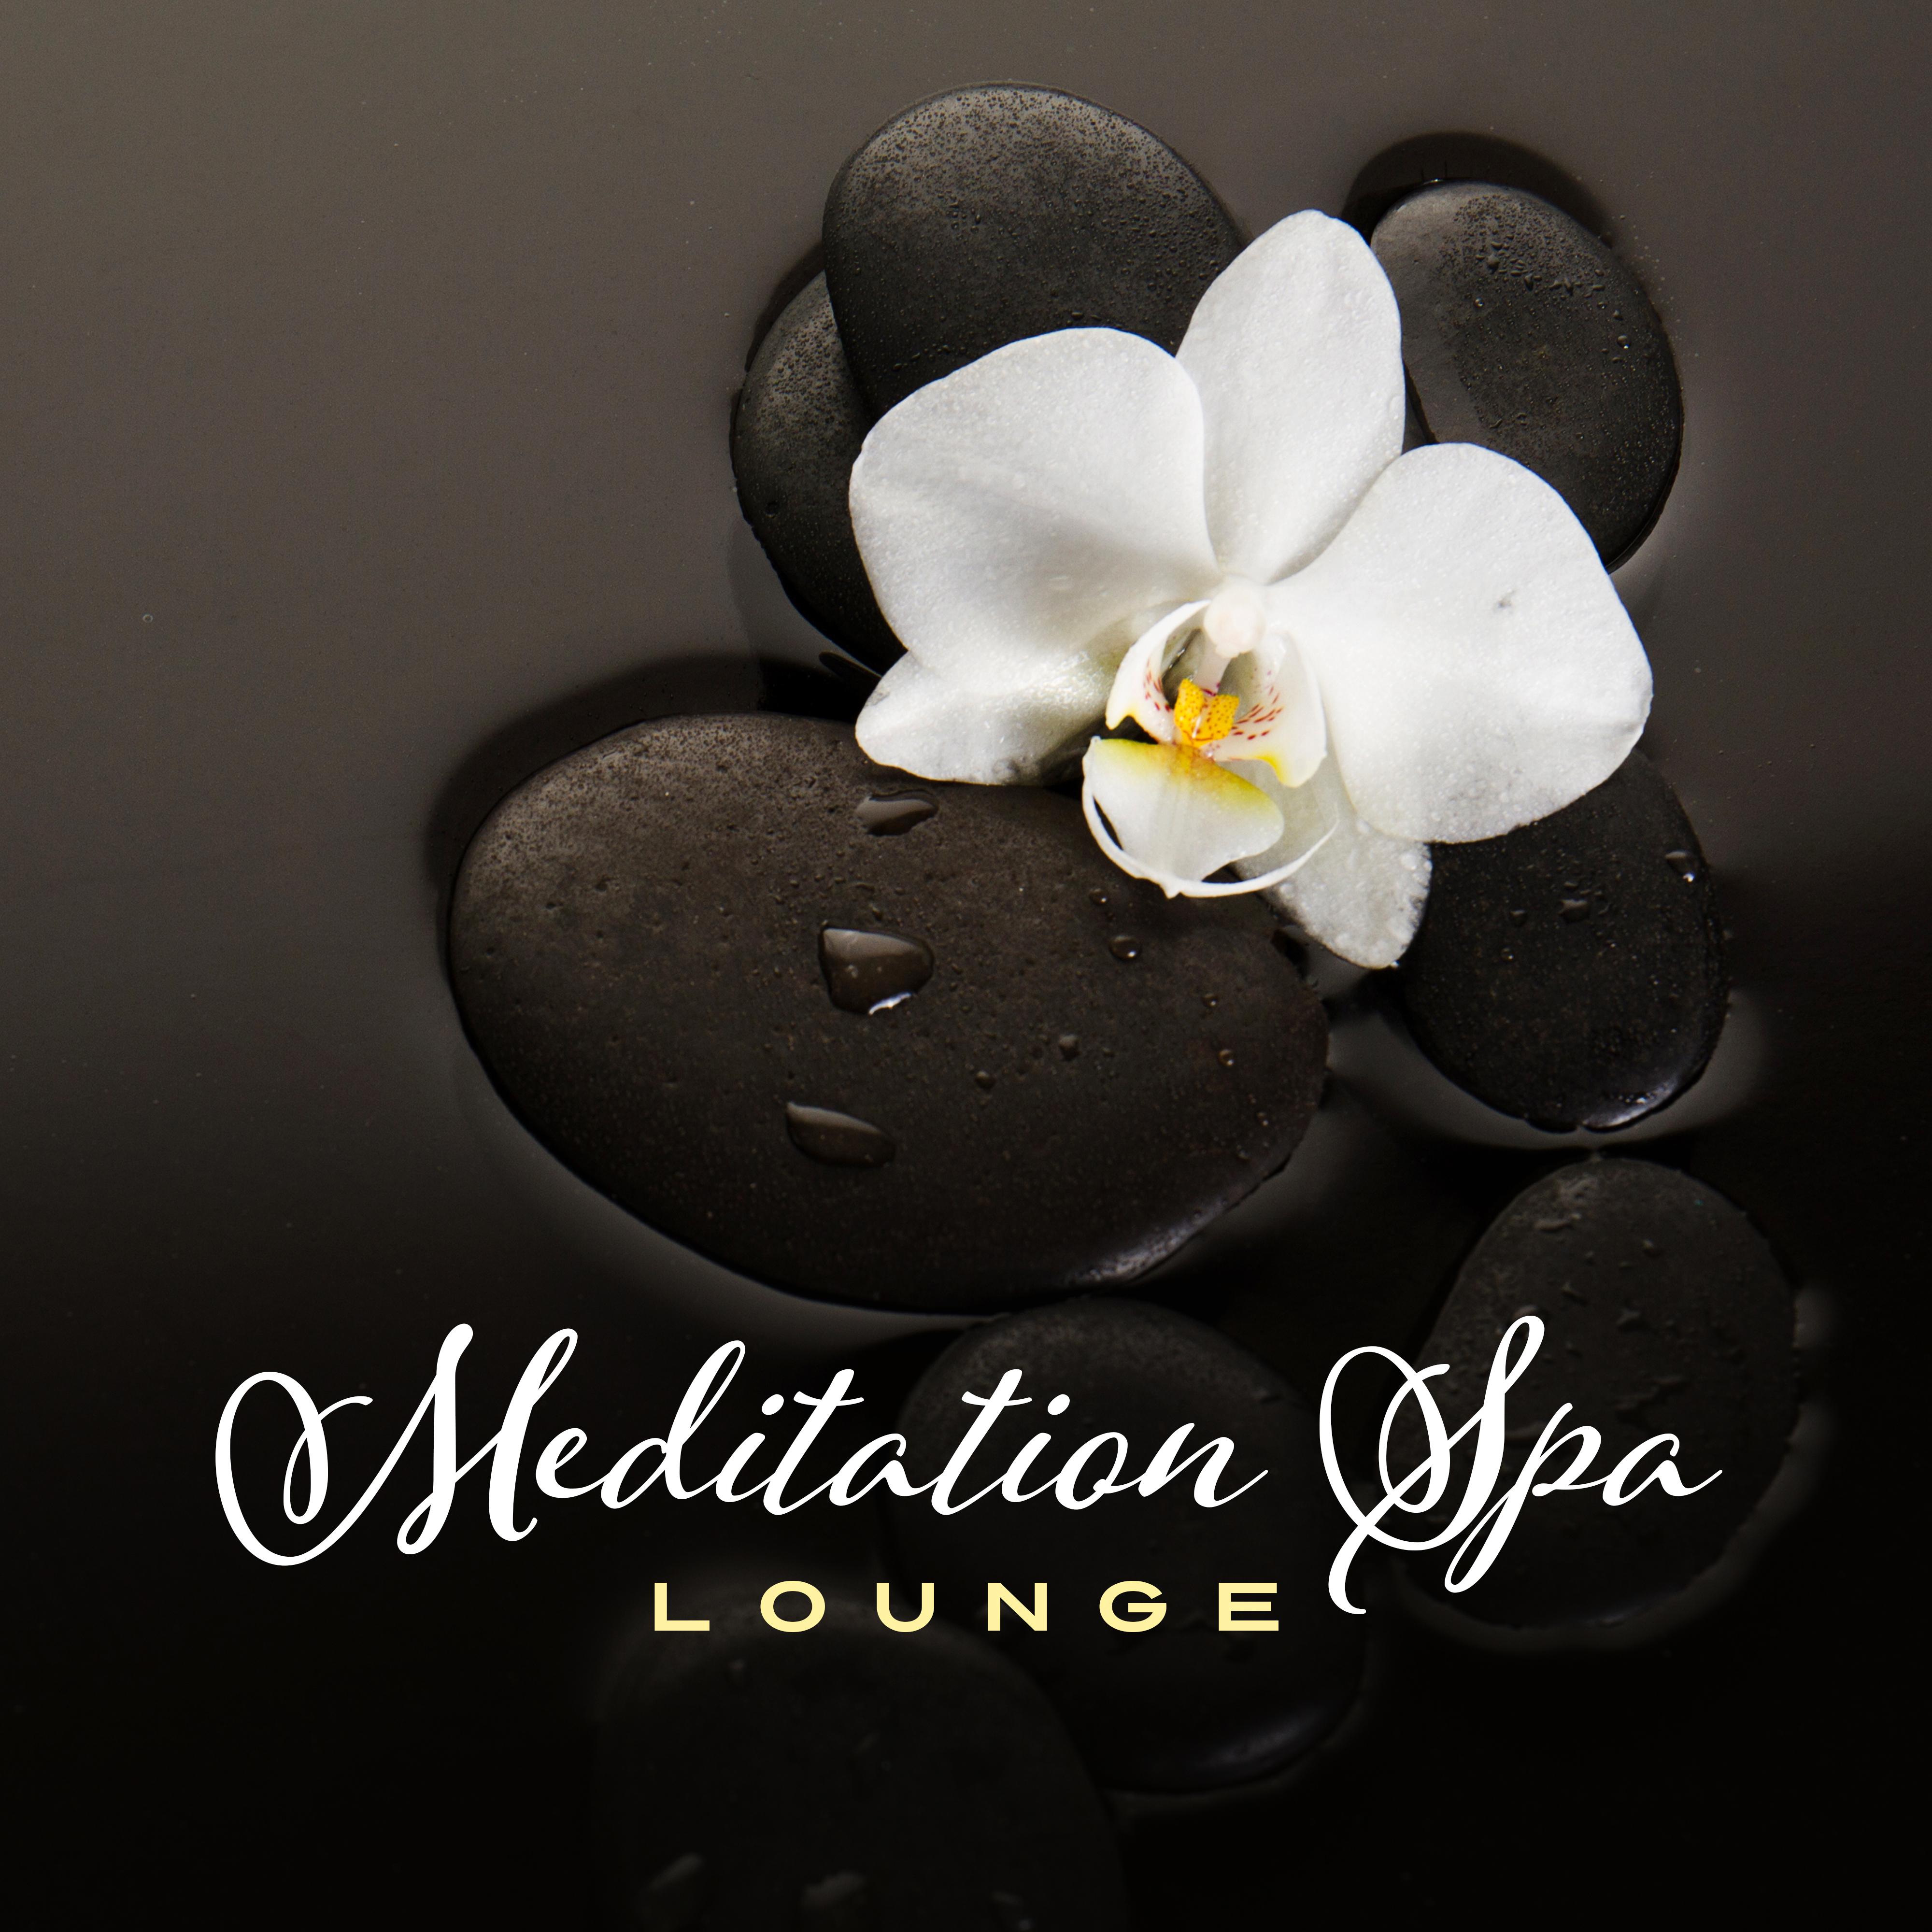 Meditation Spa Lounge